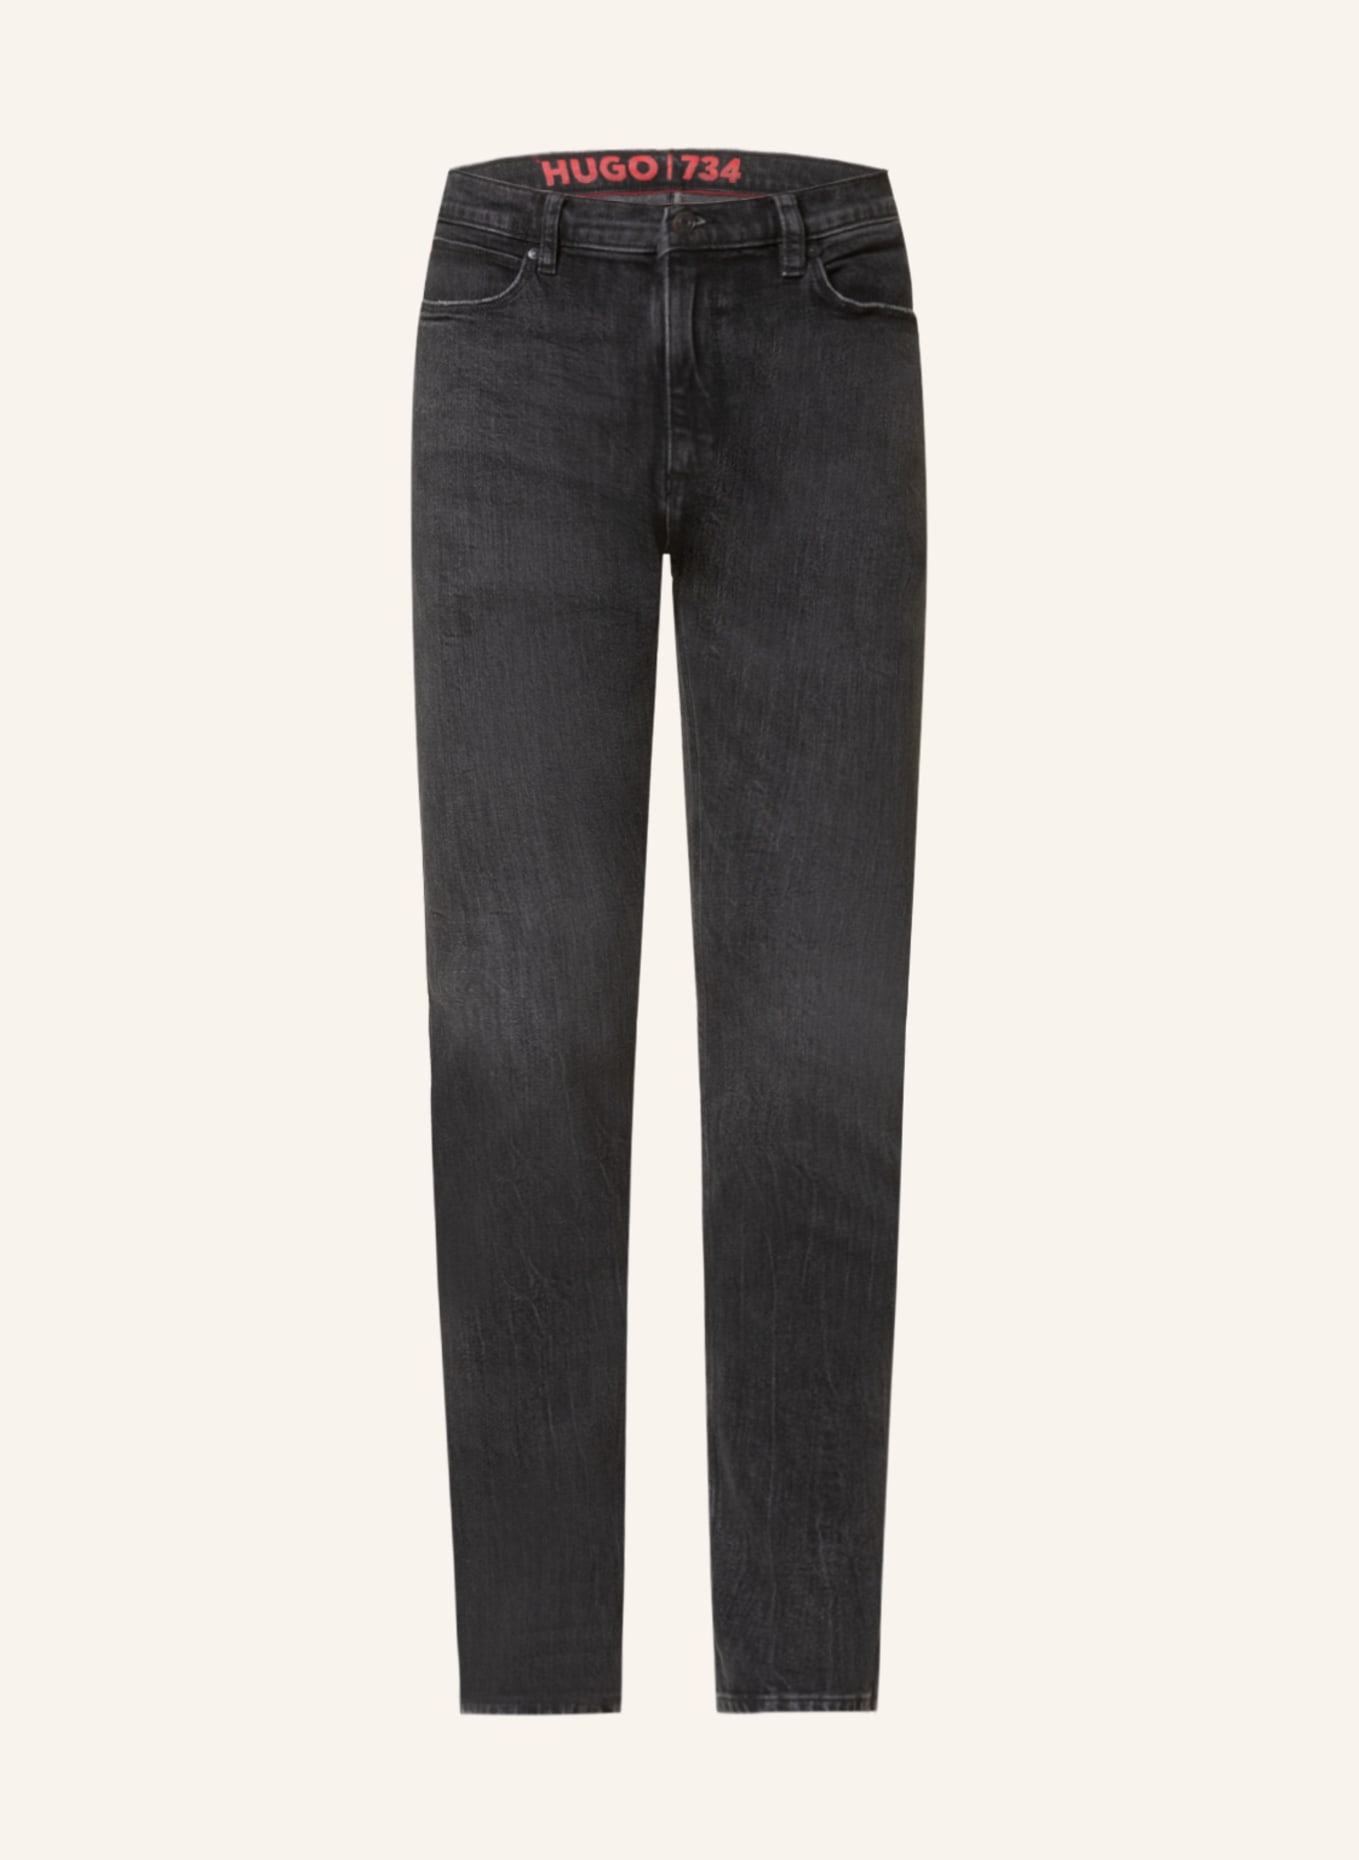 HUGO Jeans 734 Extra Slim Fit, Farbe: 010 CHARCOAL (Bild 1)